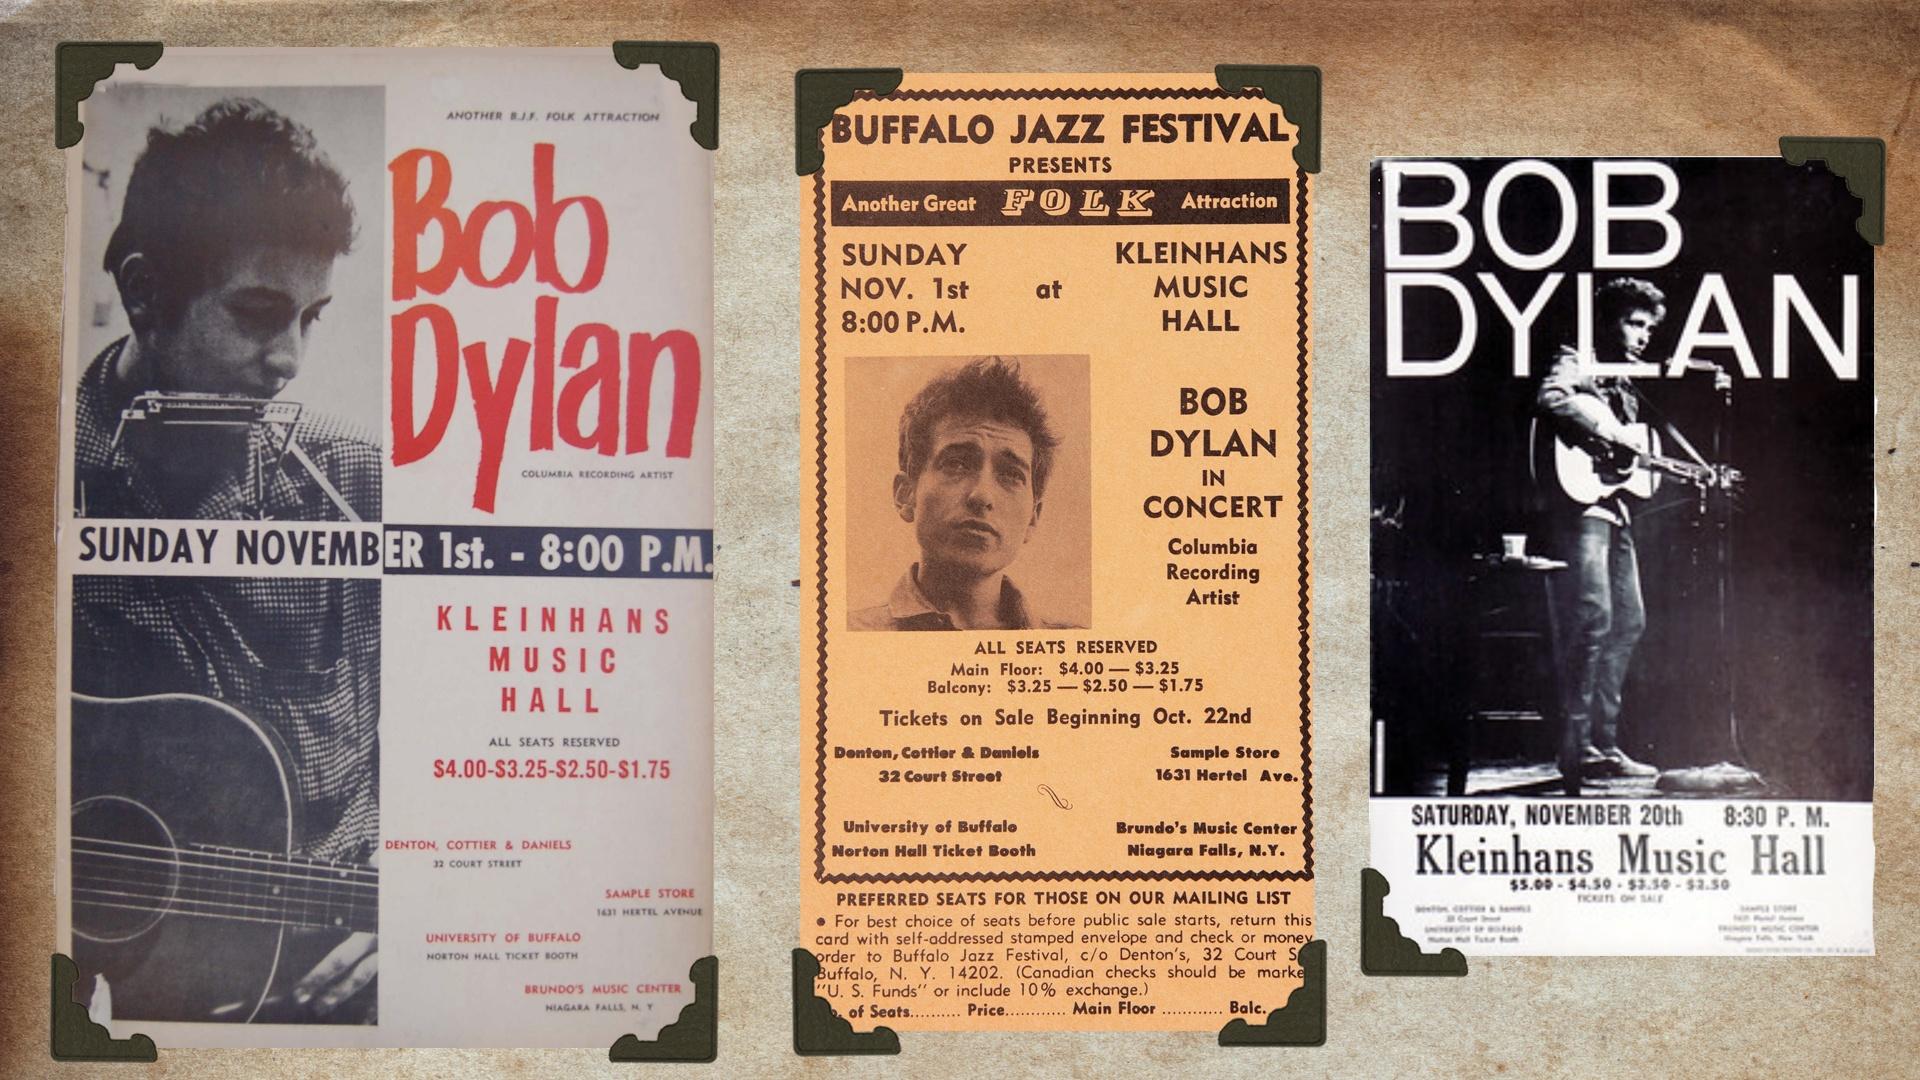 Bob Dylan memorabilia from Kleinhans Music Hall Performance